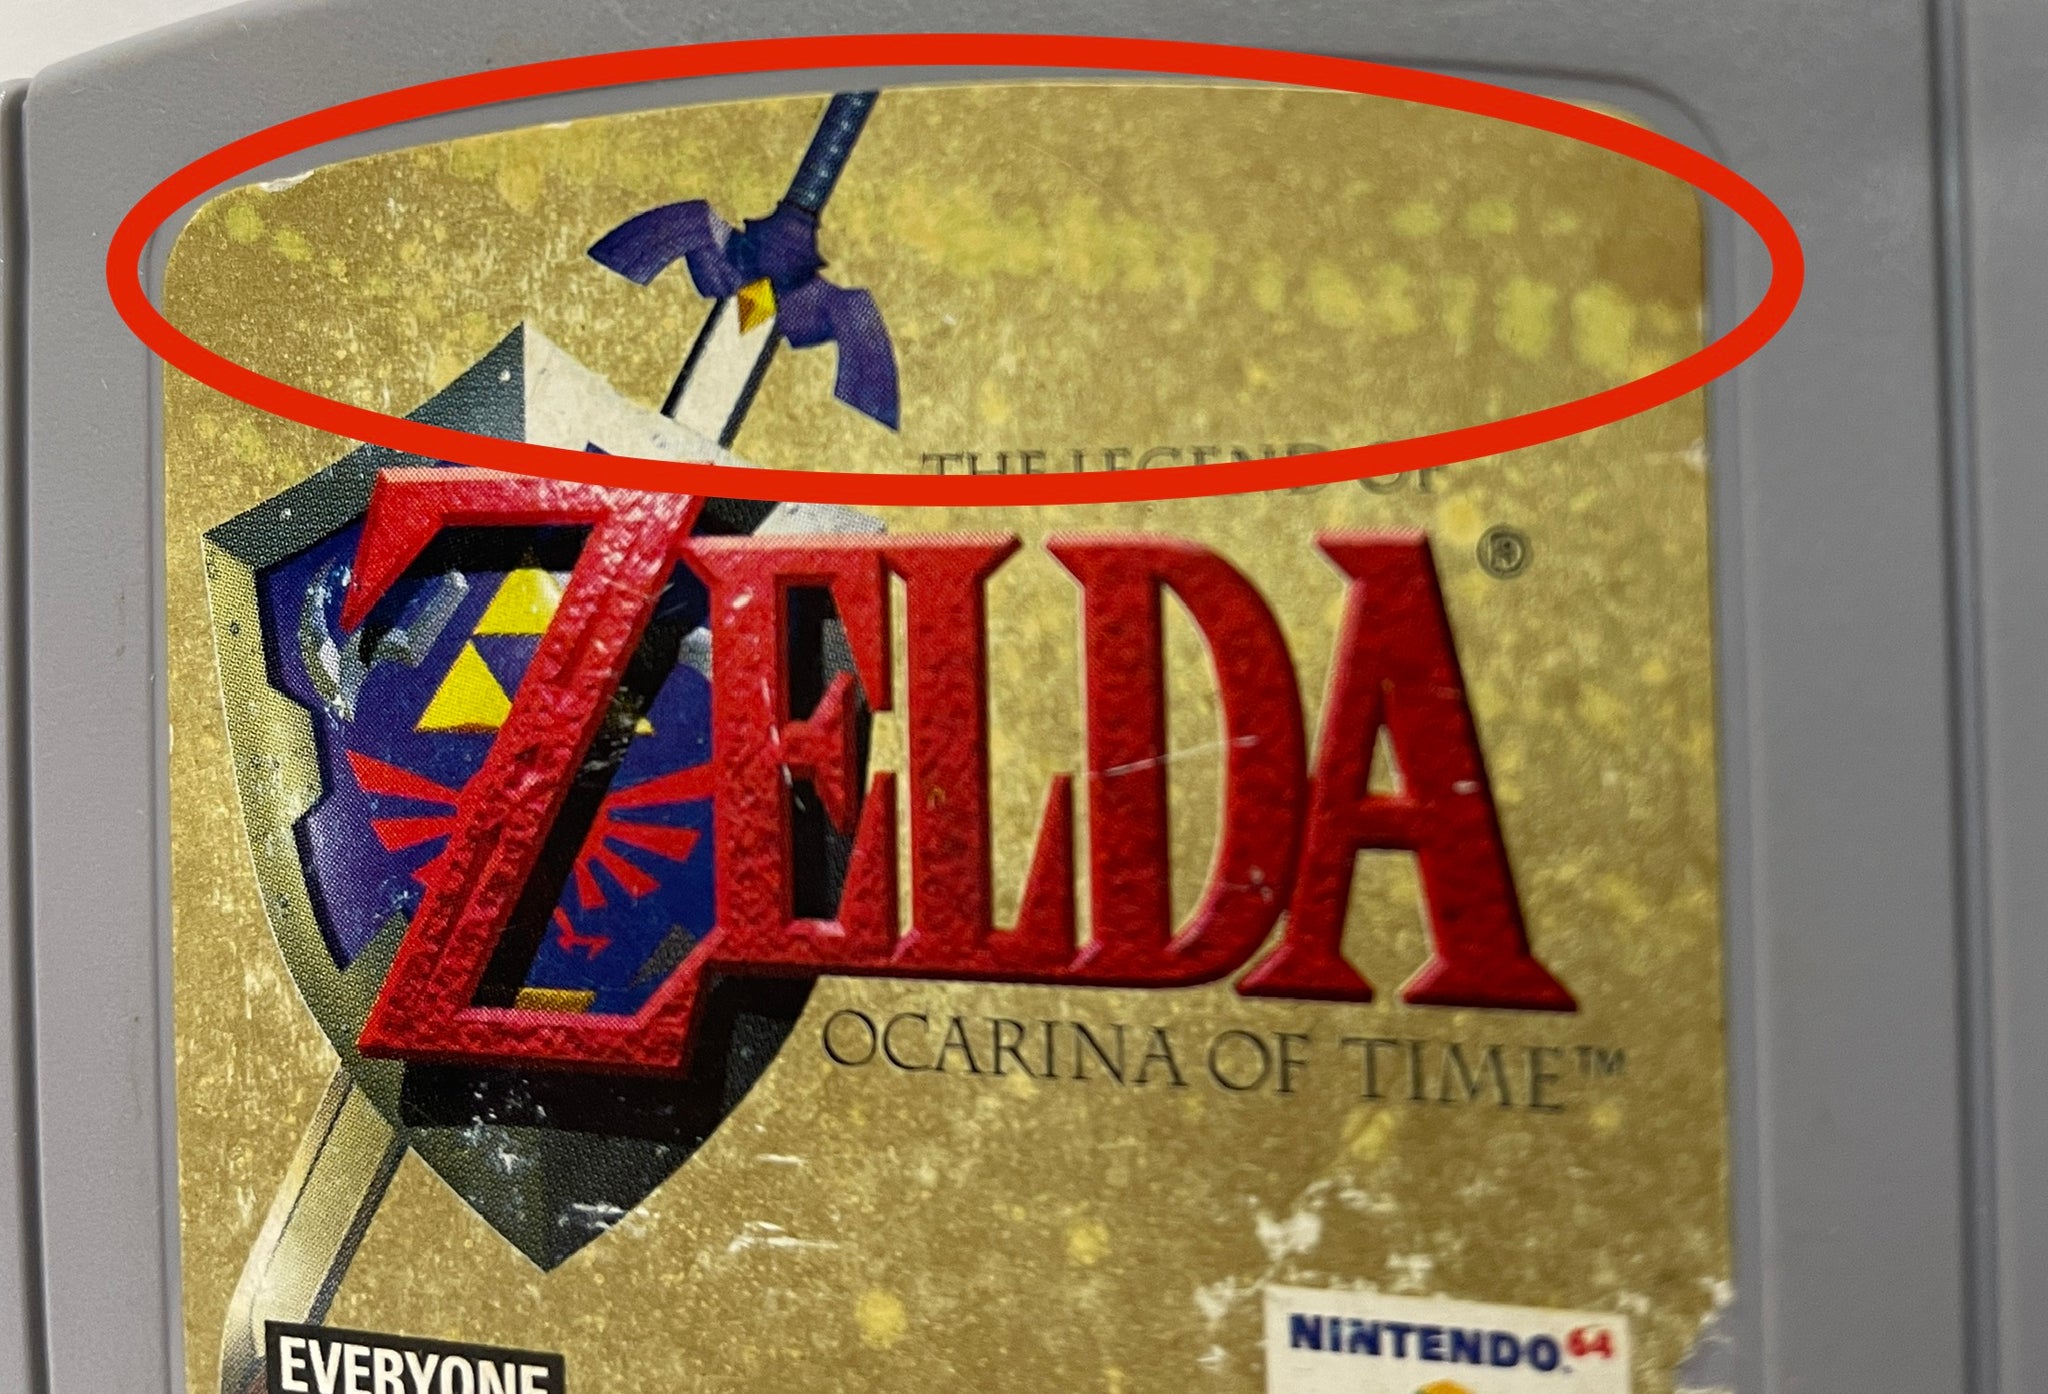 1998 N64 Nintendo 64 The Legend of Zelda: Ocarina of Time (USA) CIB Video  Game – Wata 6.5 on Goldin Auctions